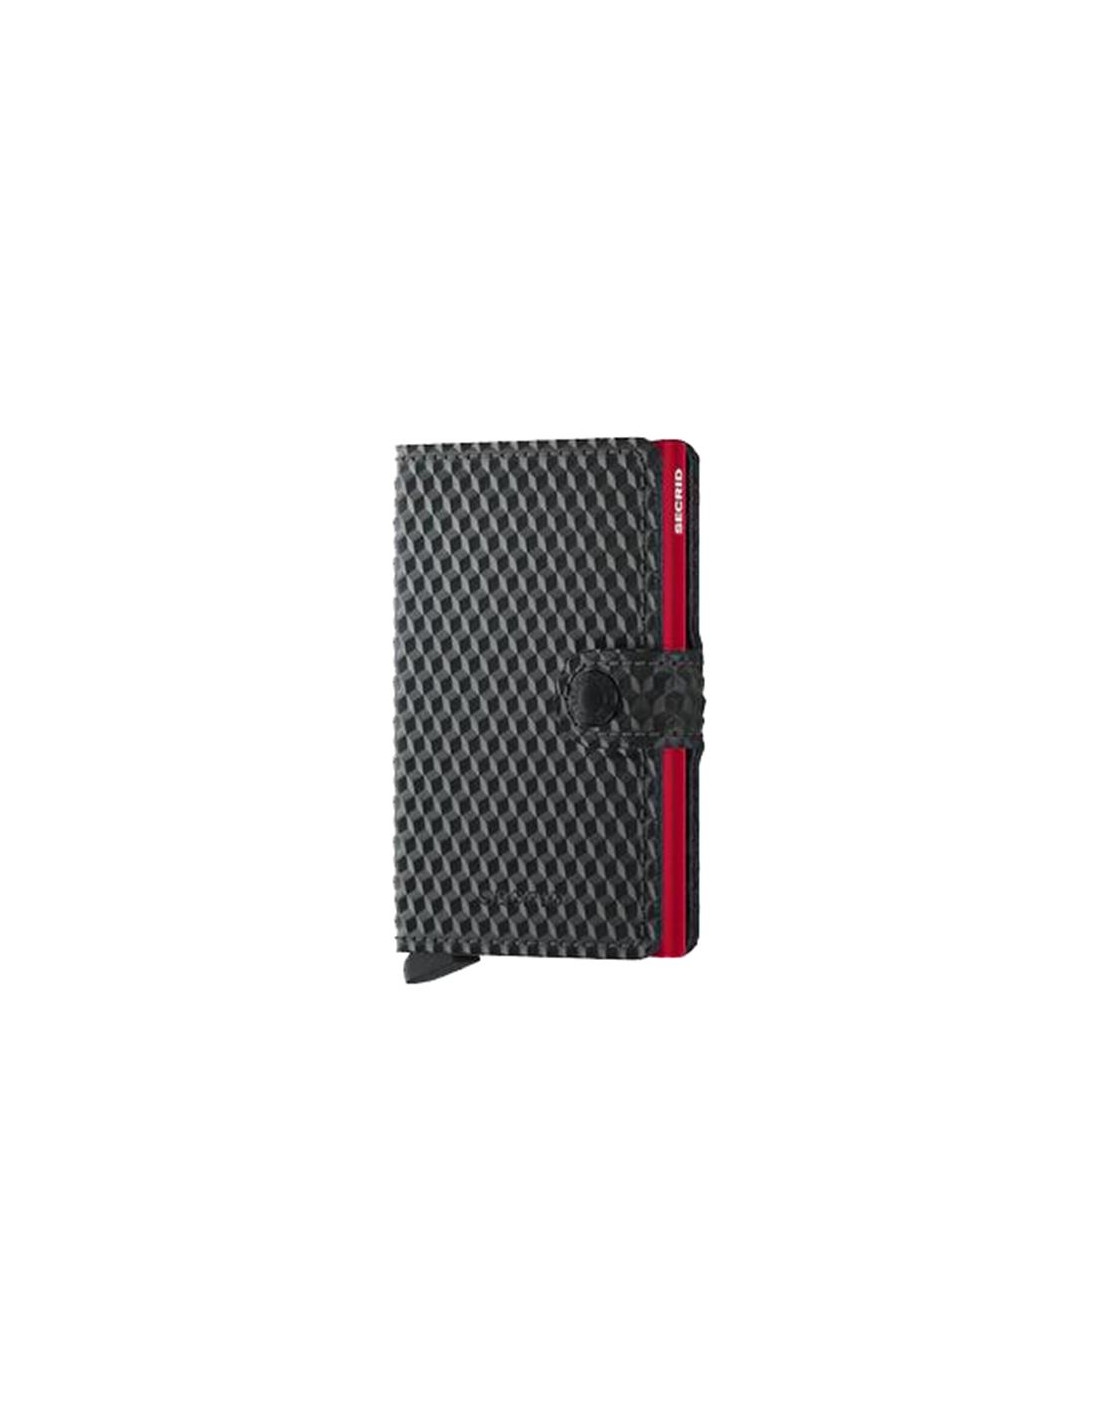 Cartera secrid miniwallet cubic black-red product